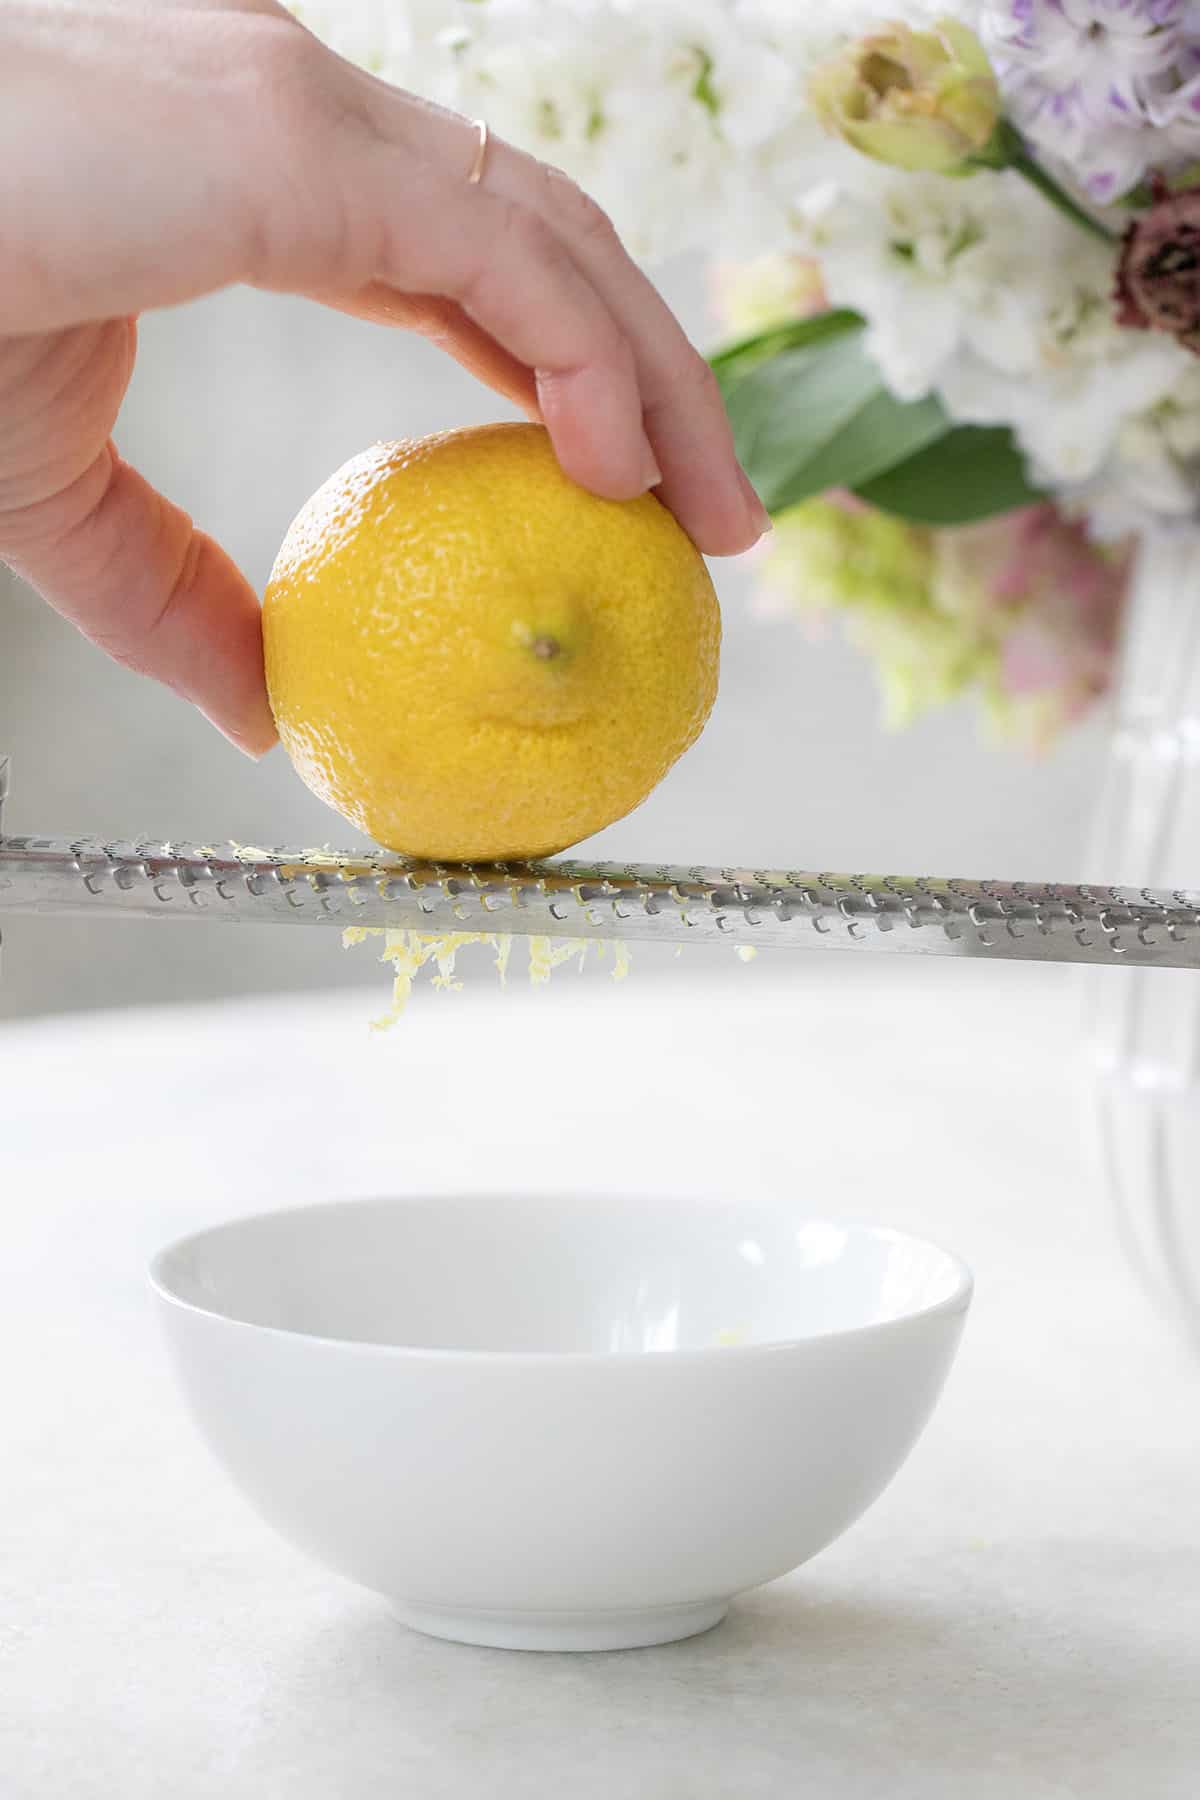 zesting a lemon with a microplane